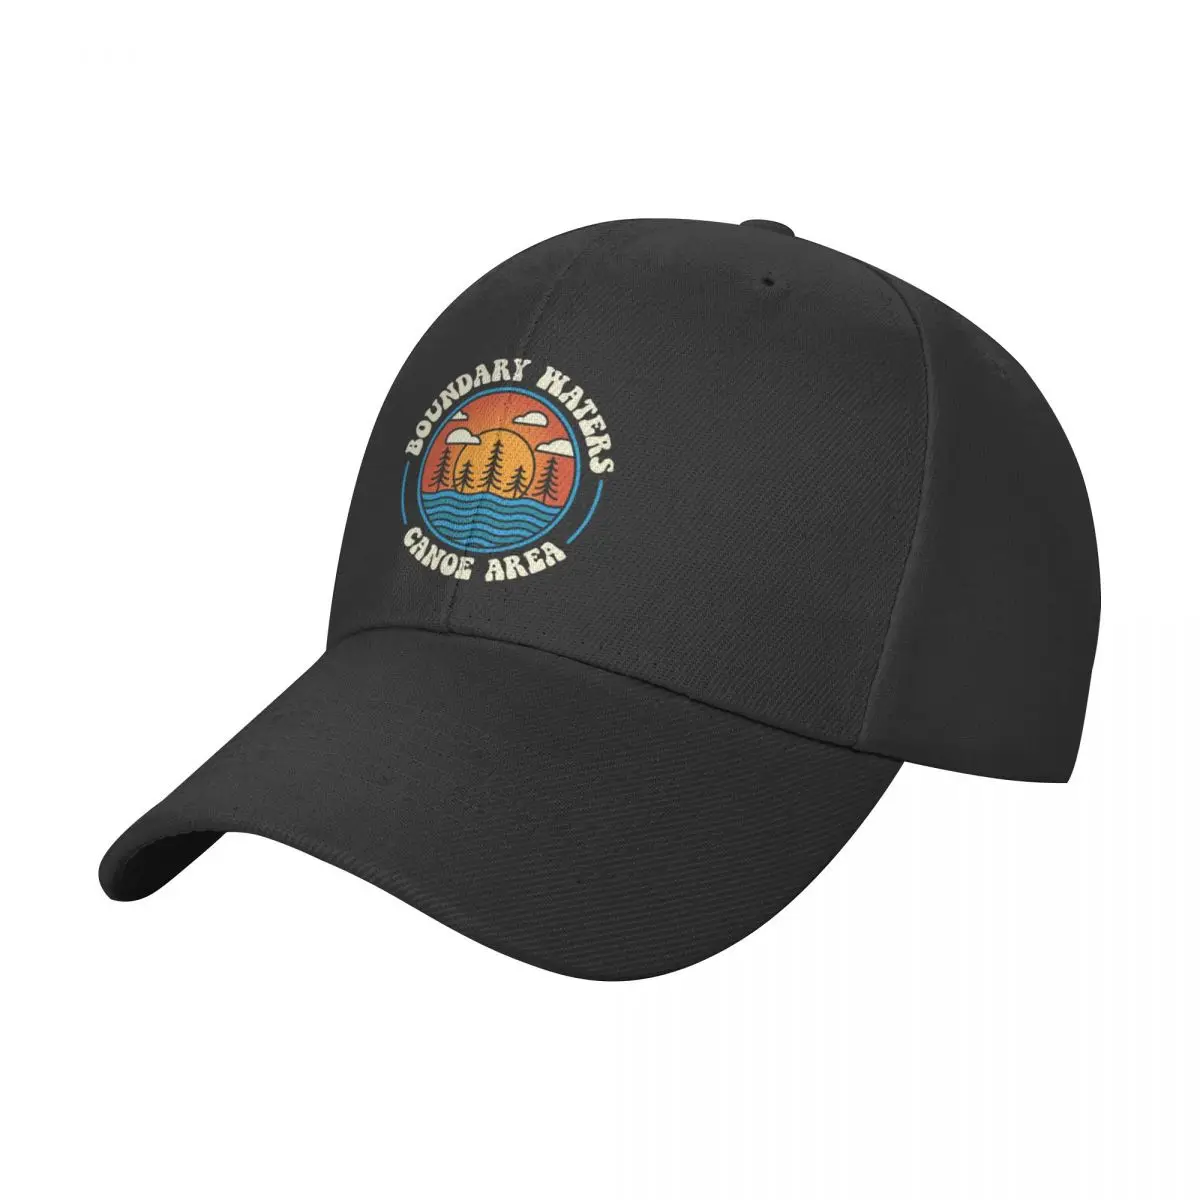 

Boundary Waters Canoe Area Minnesota BWCA Baseball Cap Hat Man For The Sun Sports Cap western Hat beach hat Mens Caps Women's